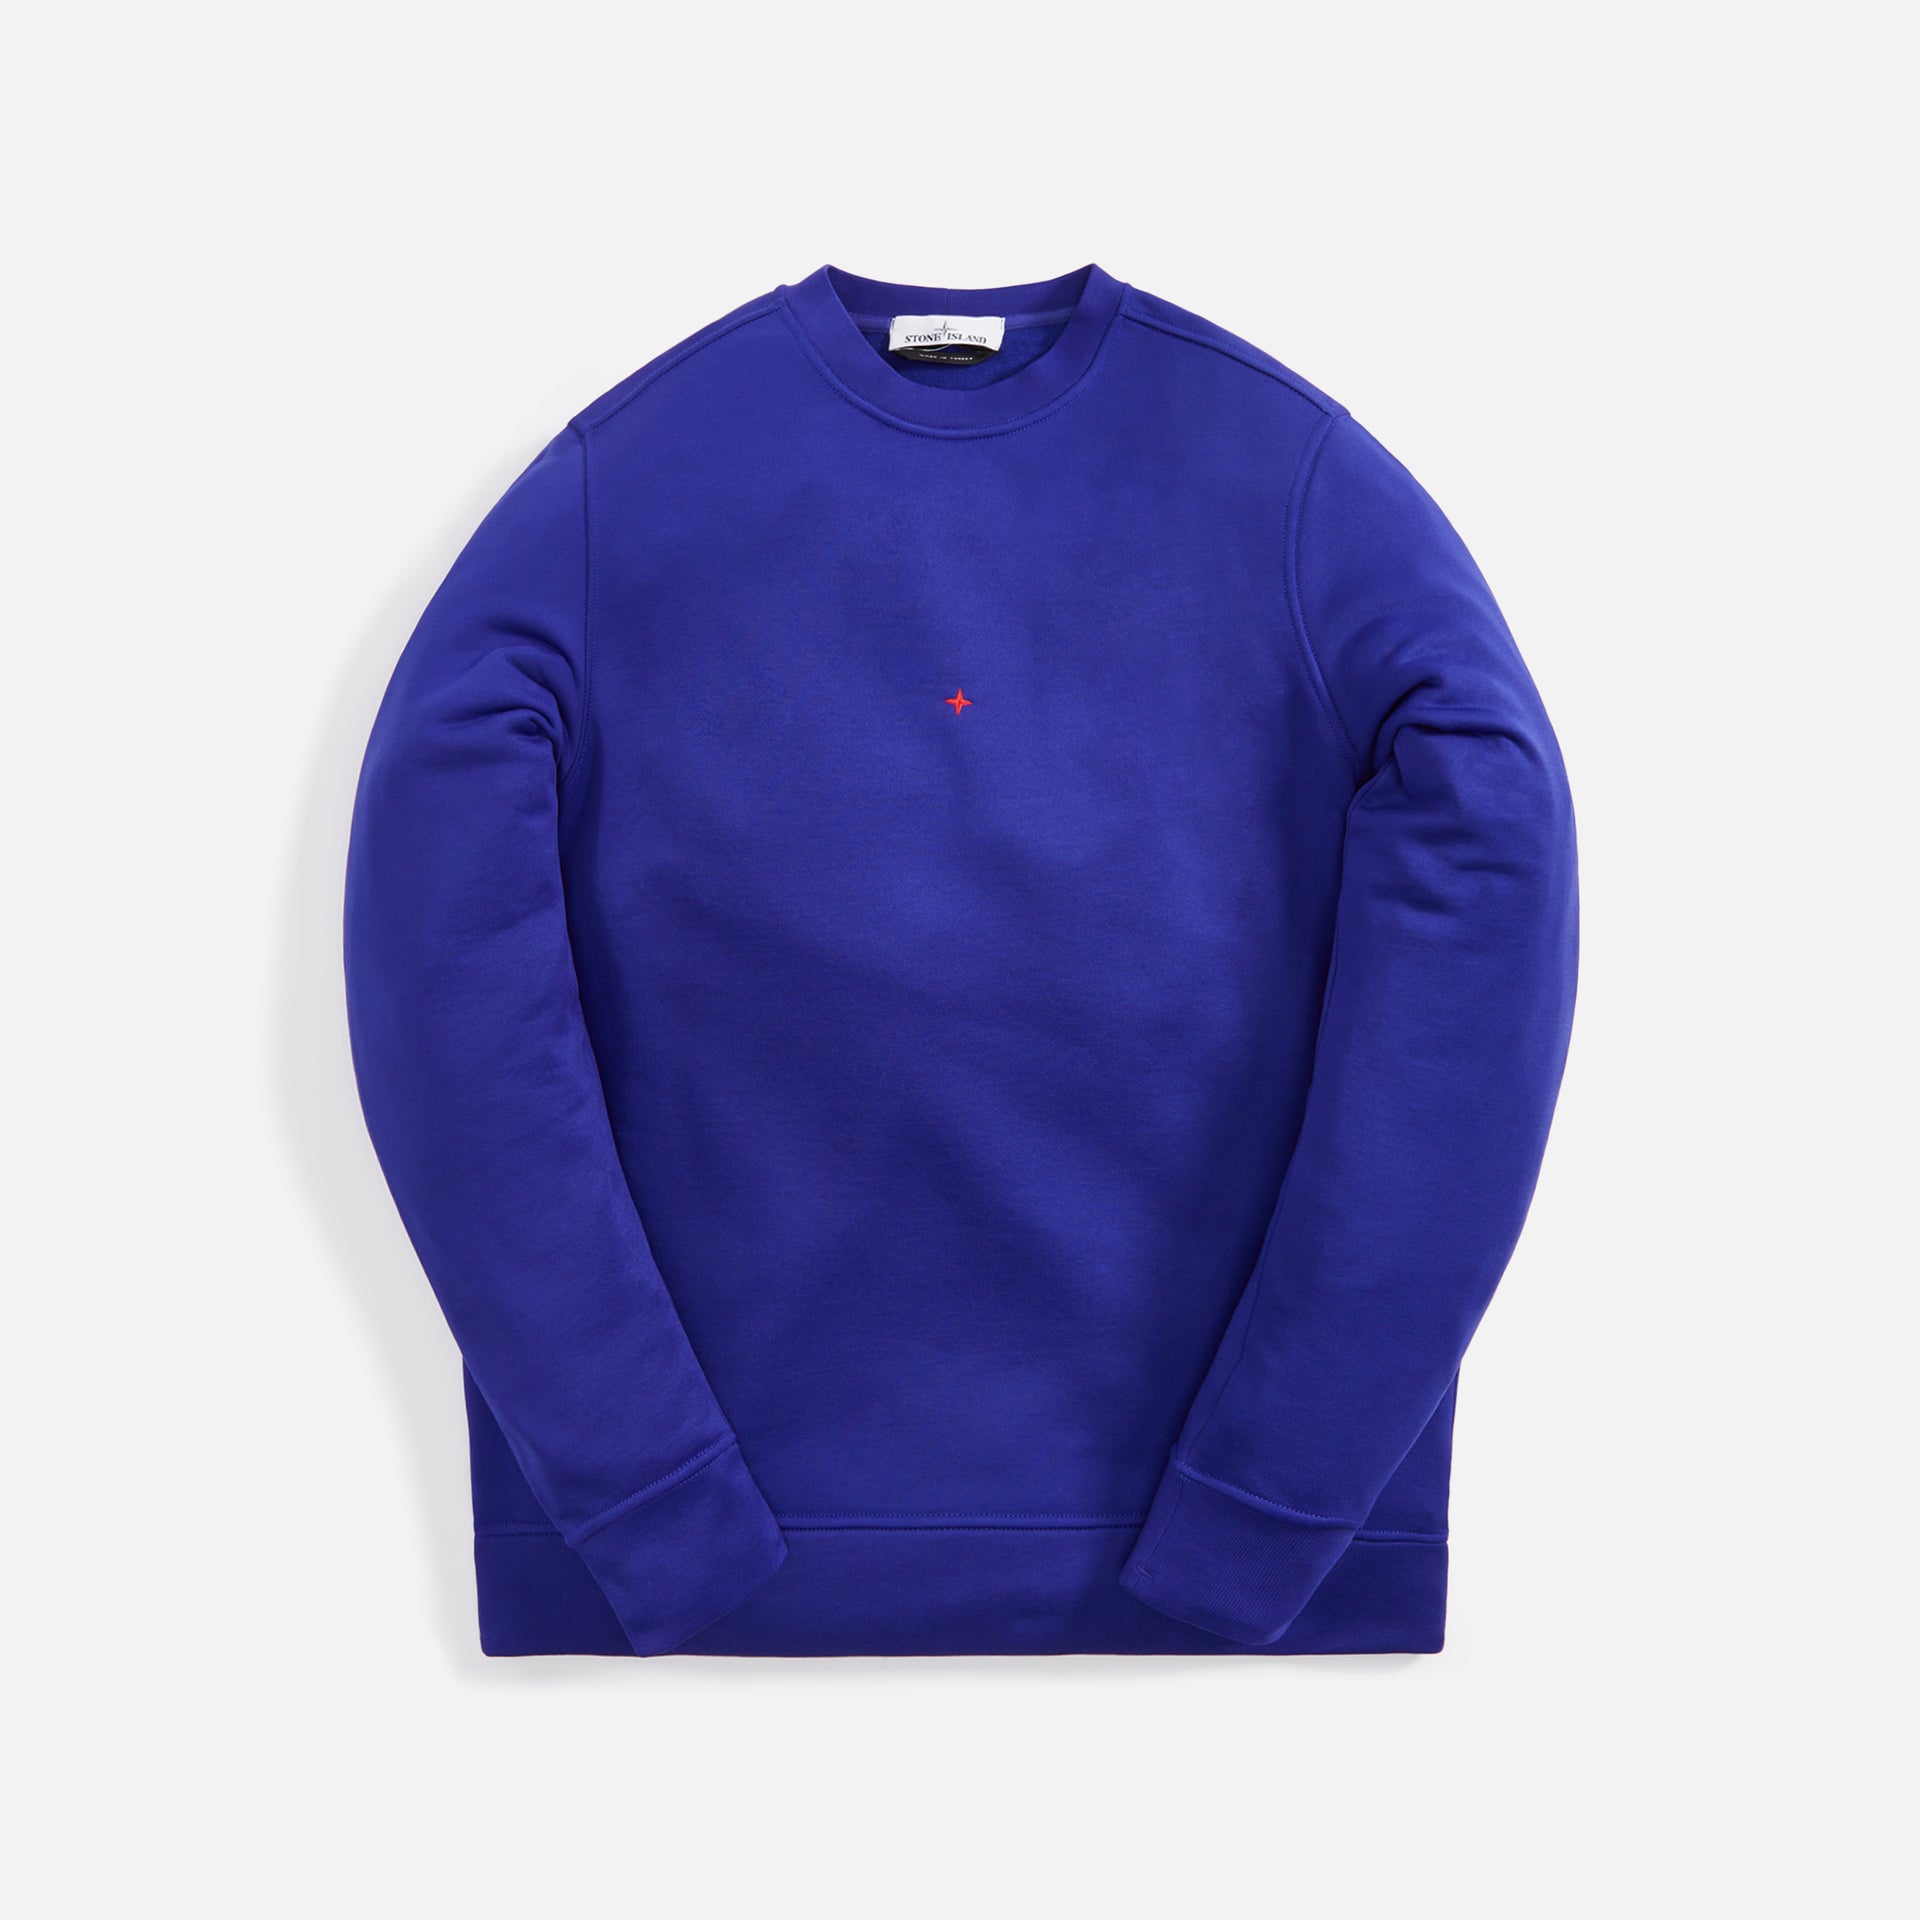 Stone Island Crewneck Sweatshirt - Bright Blue